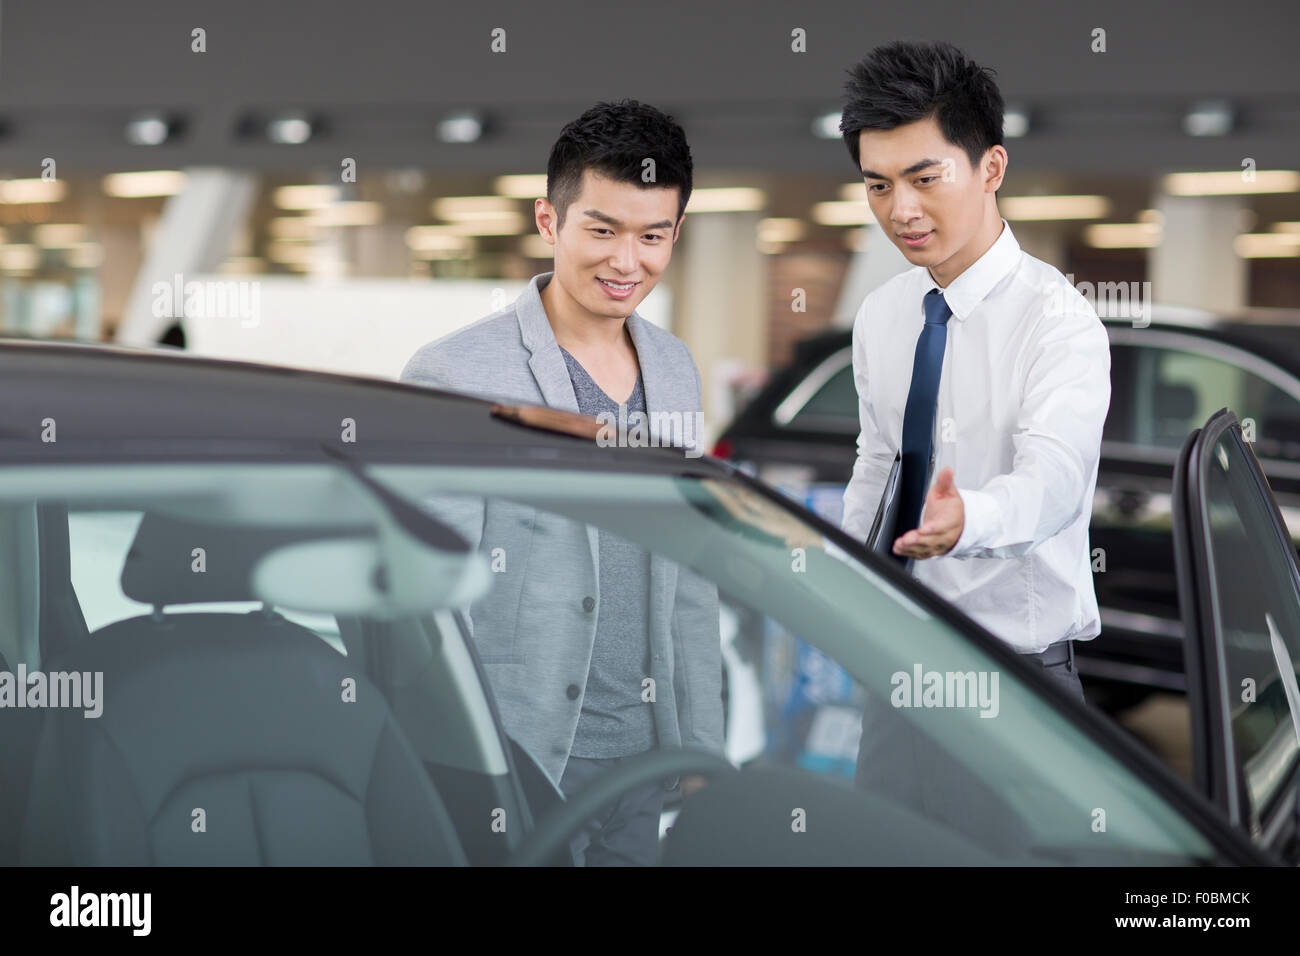 Young man choosing car in showroom Stock Photo